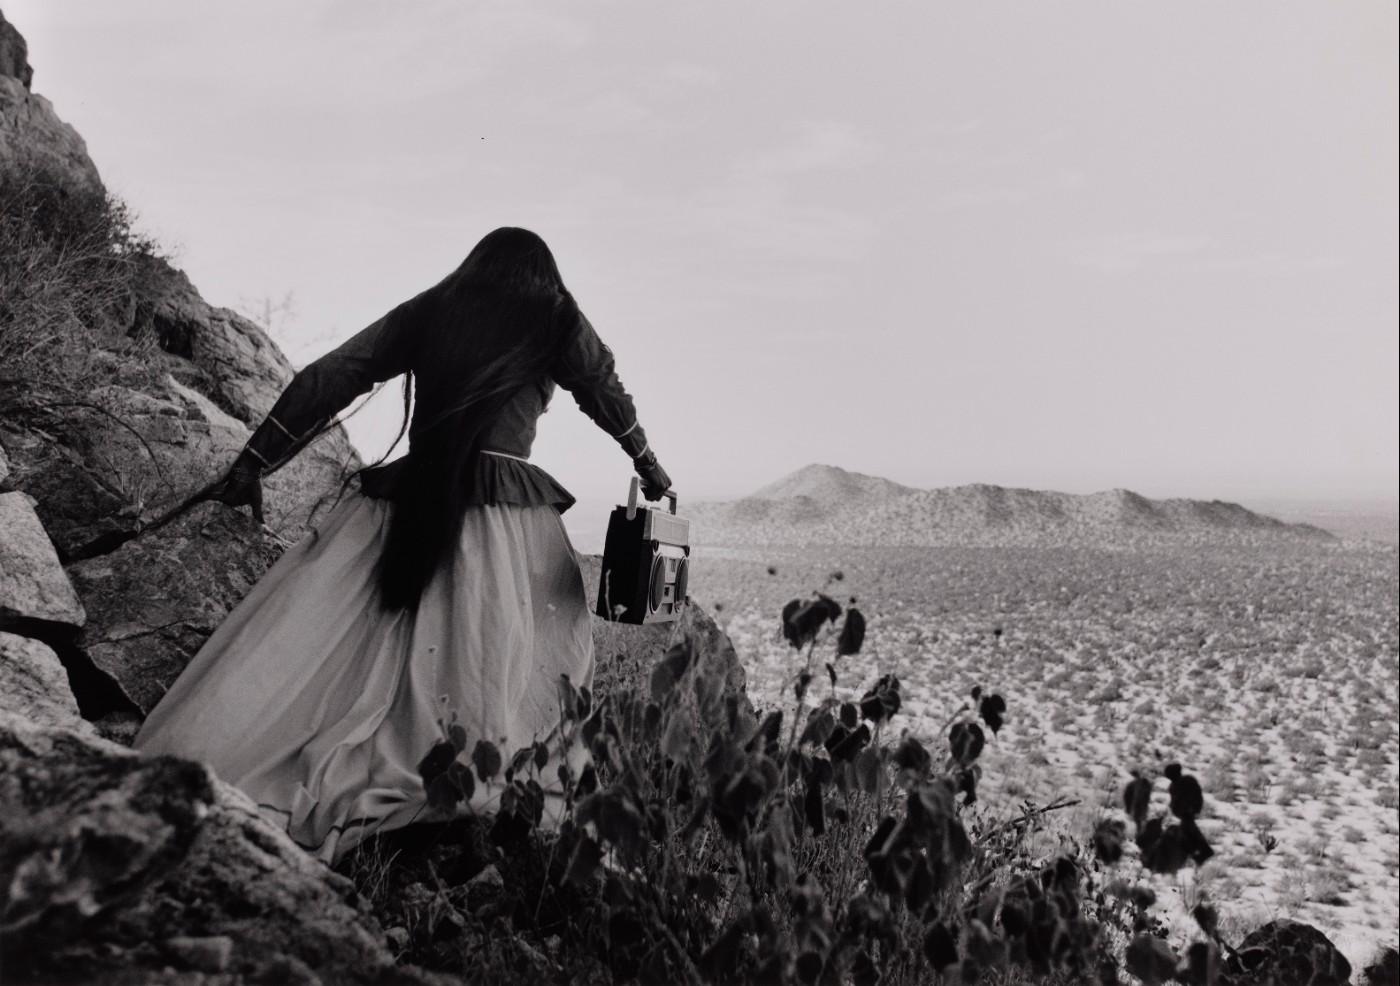 Graciela Iturbide, Angel Woman, Sonora Desert / Mujer Ángel, Desierto de Sonora México, 1979